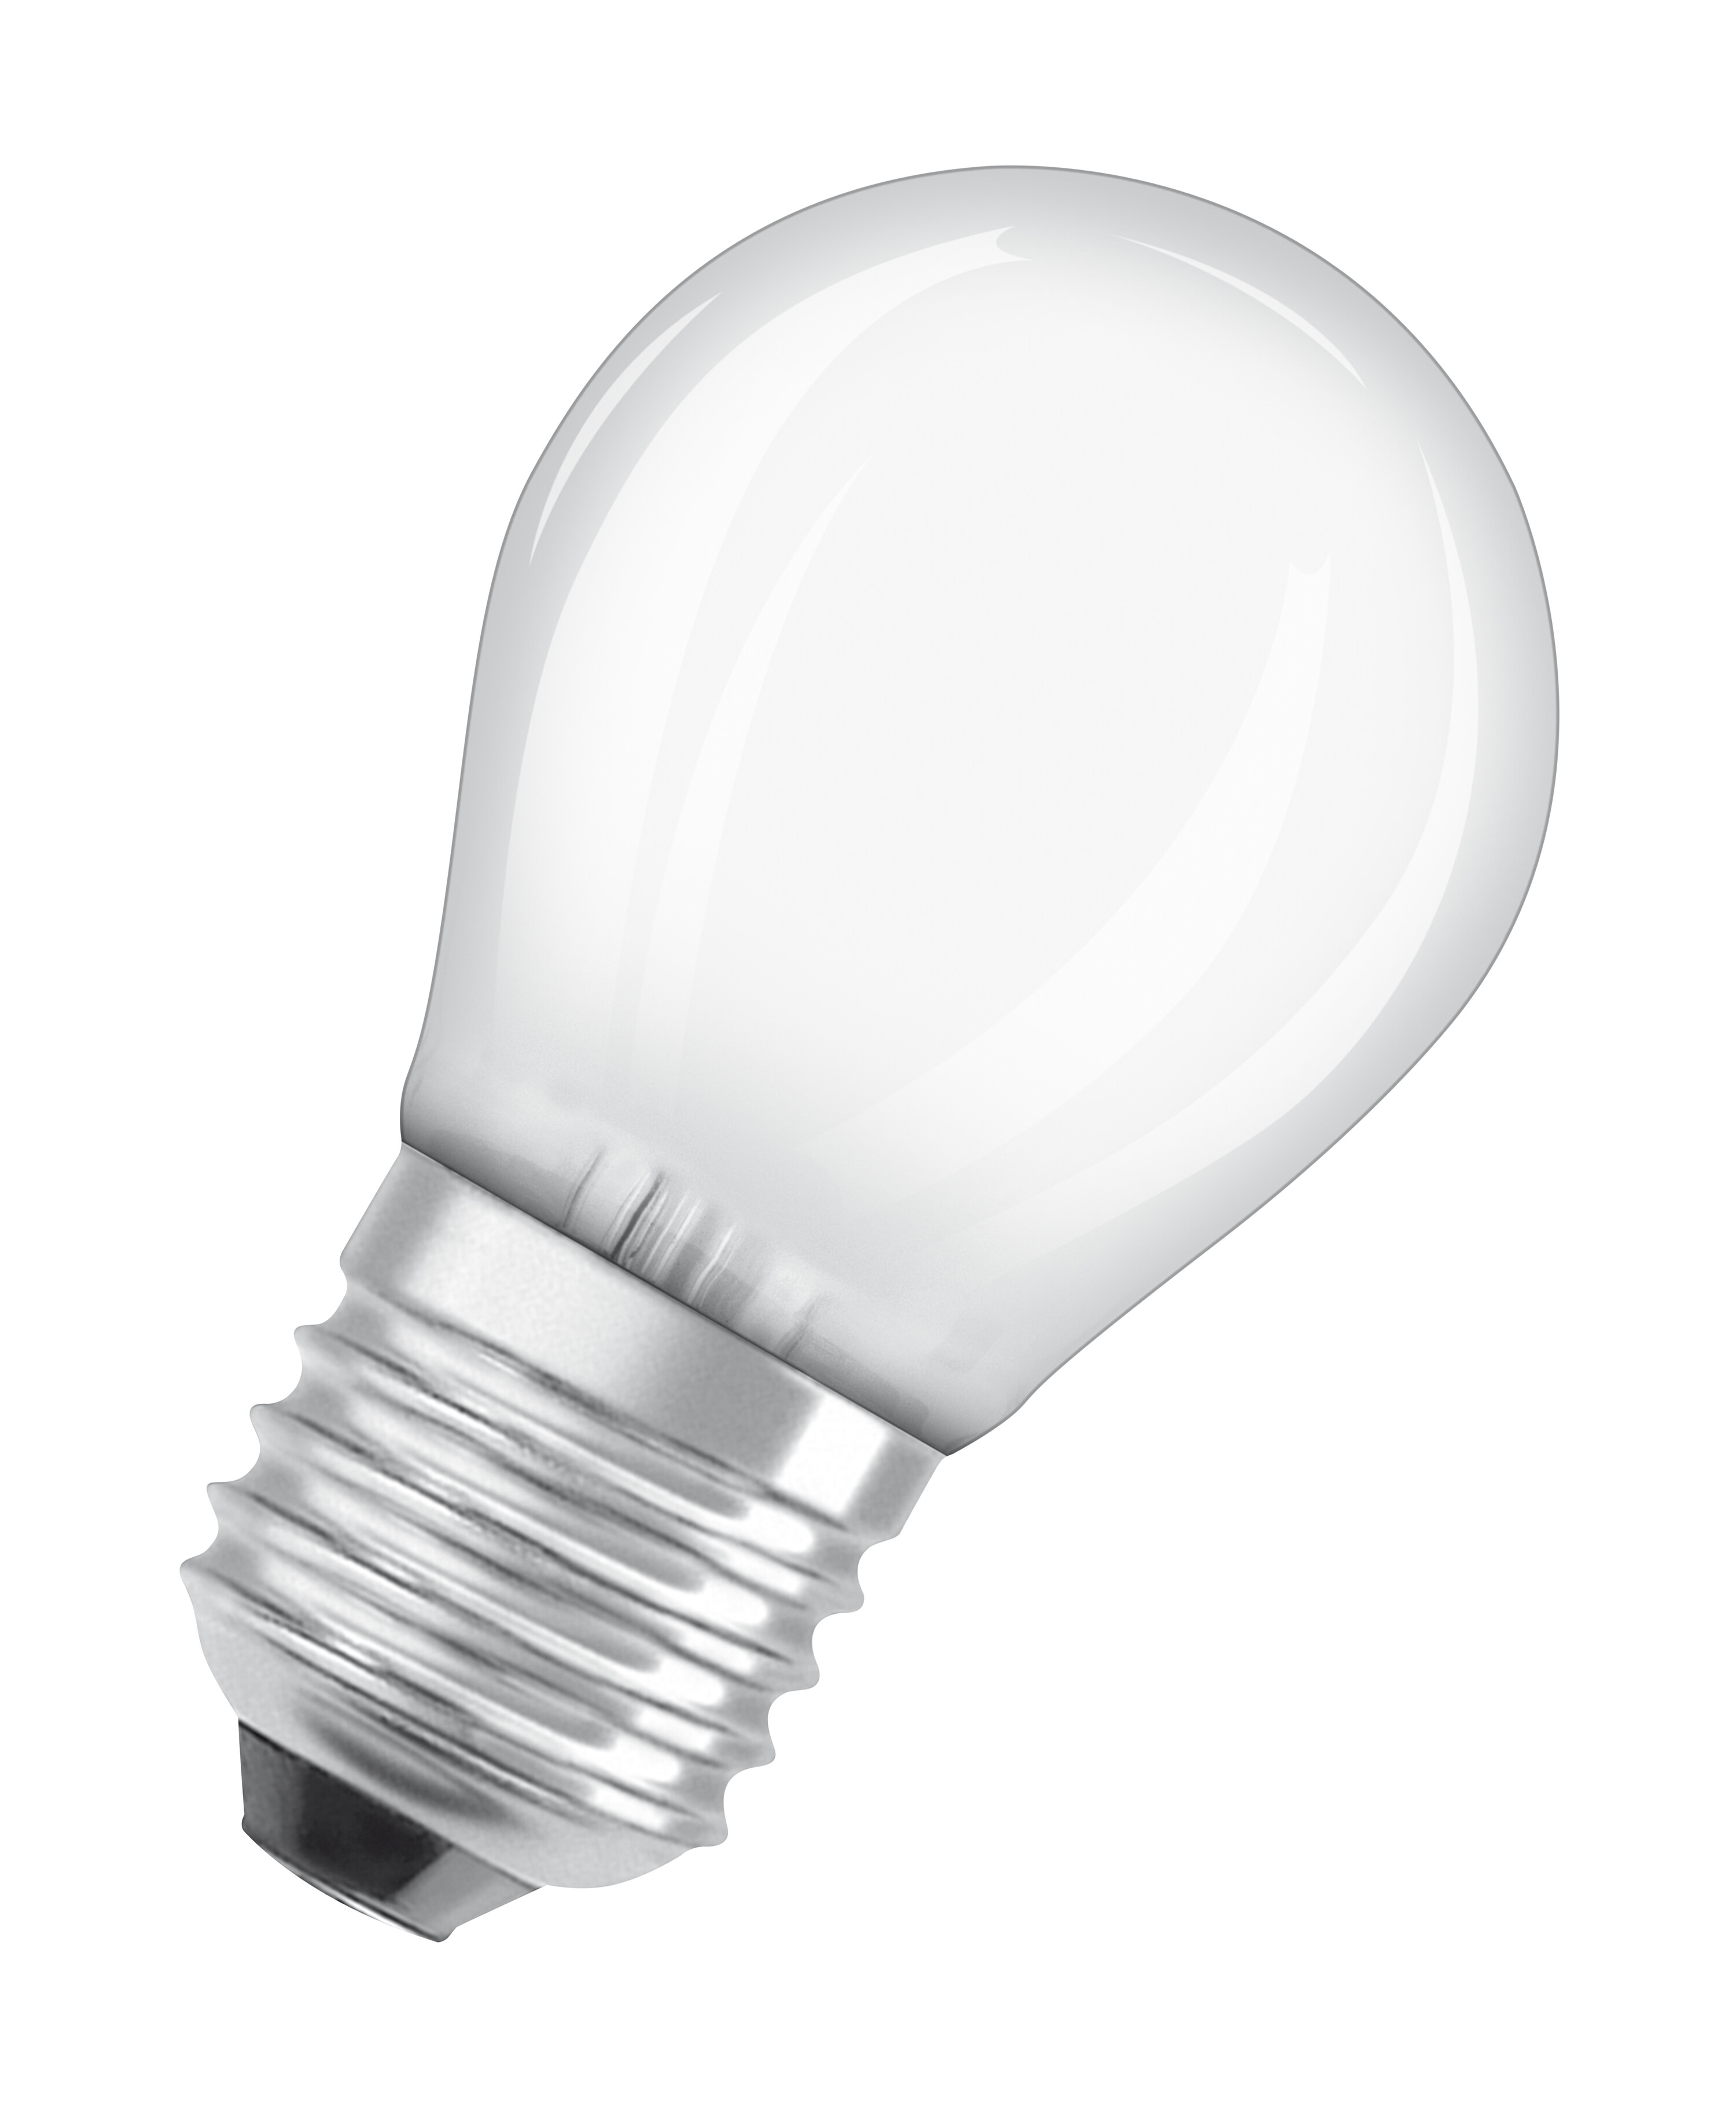 Warmweiß Lampe Lumen 470 OSRAM  P CLASSIC LED Retrofit LED